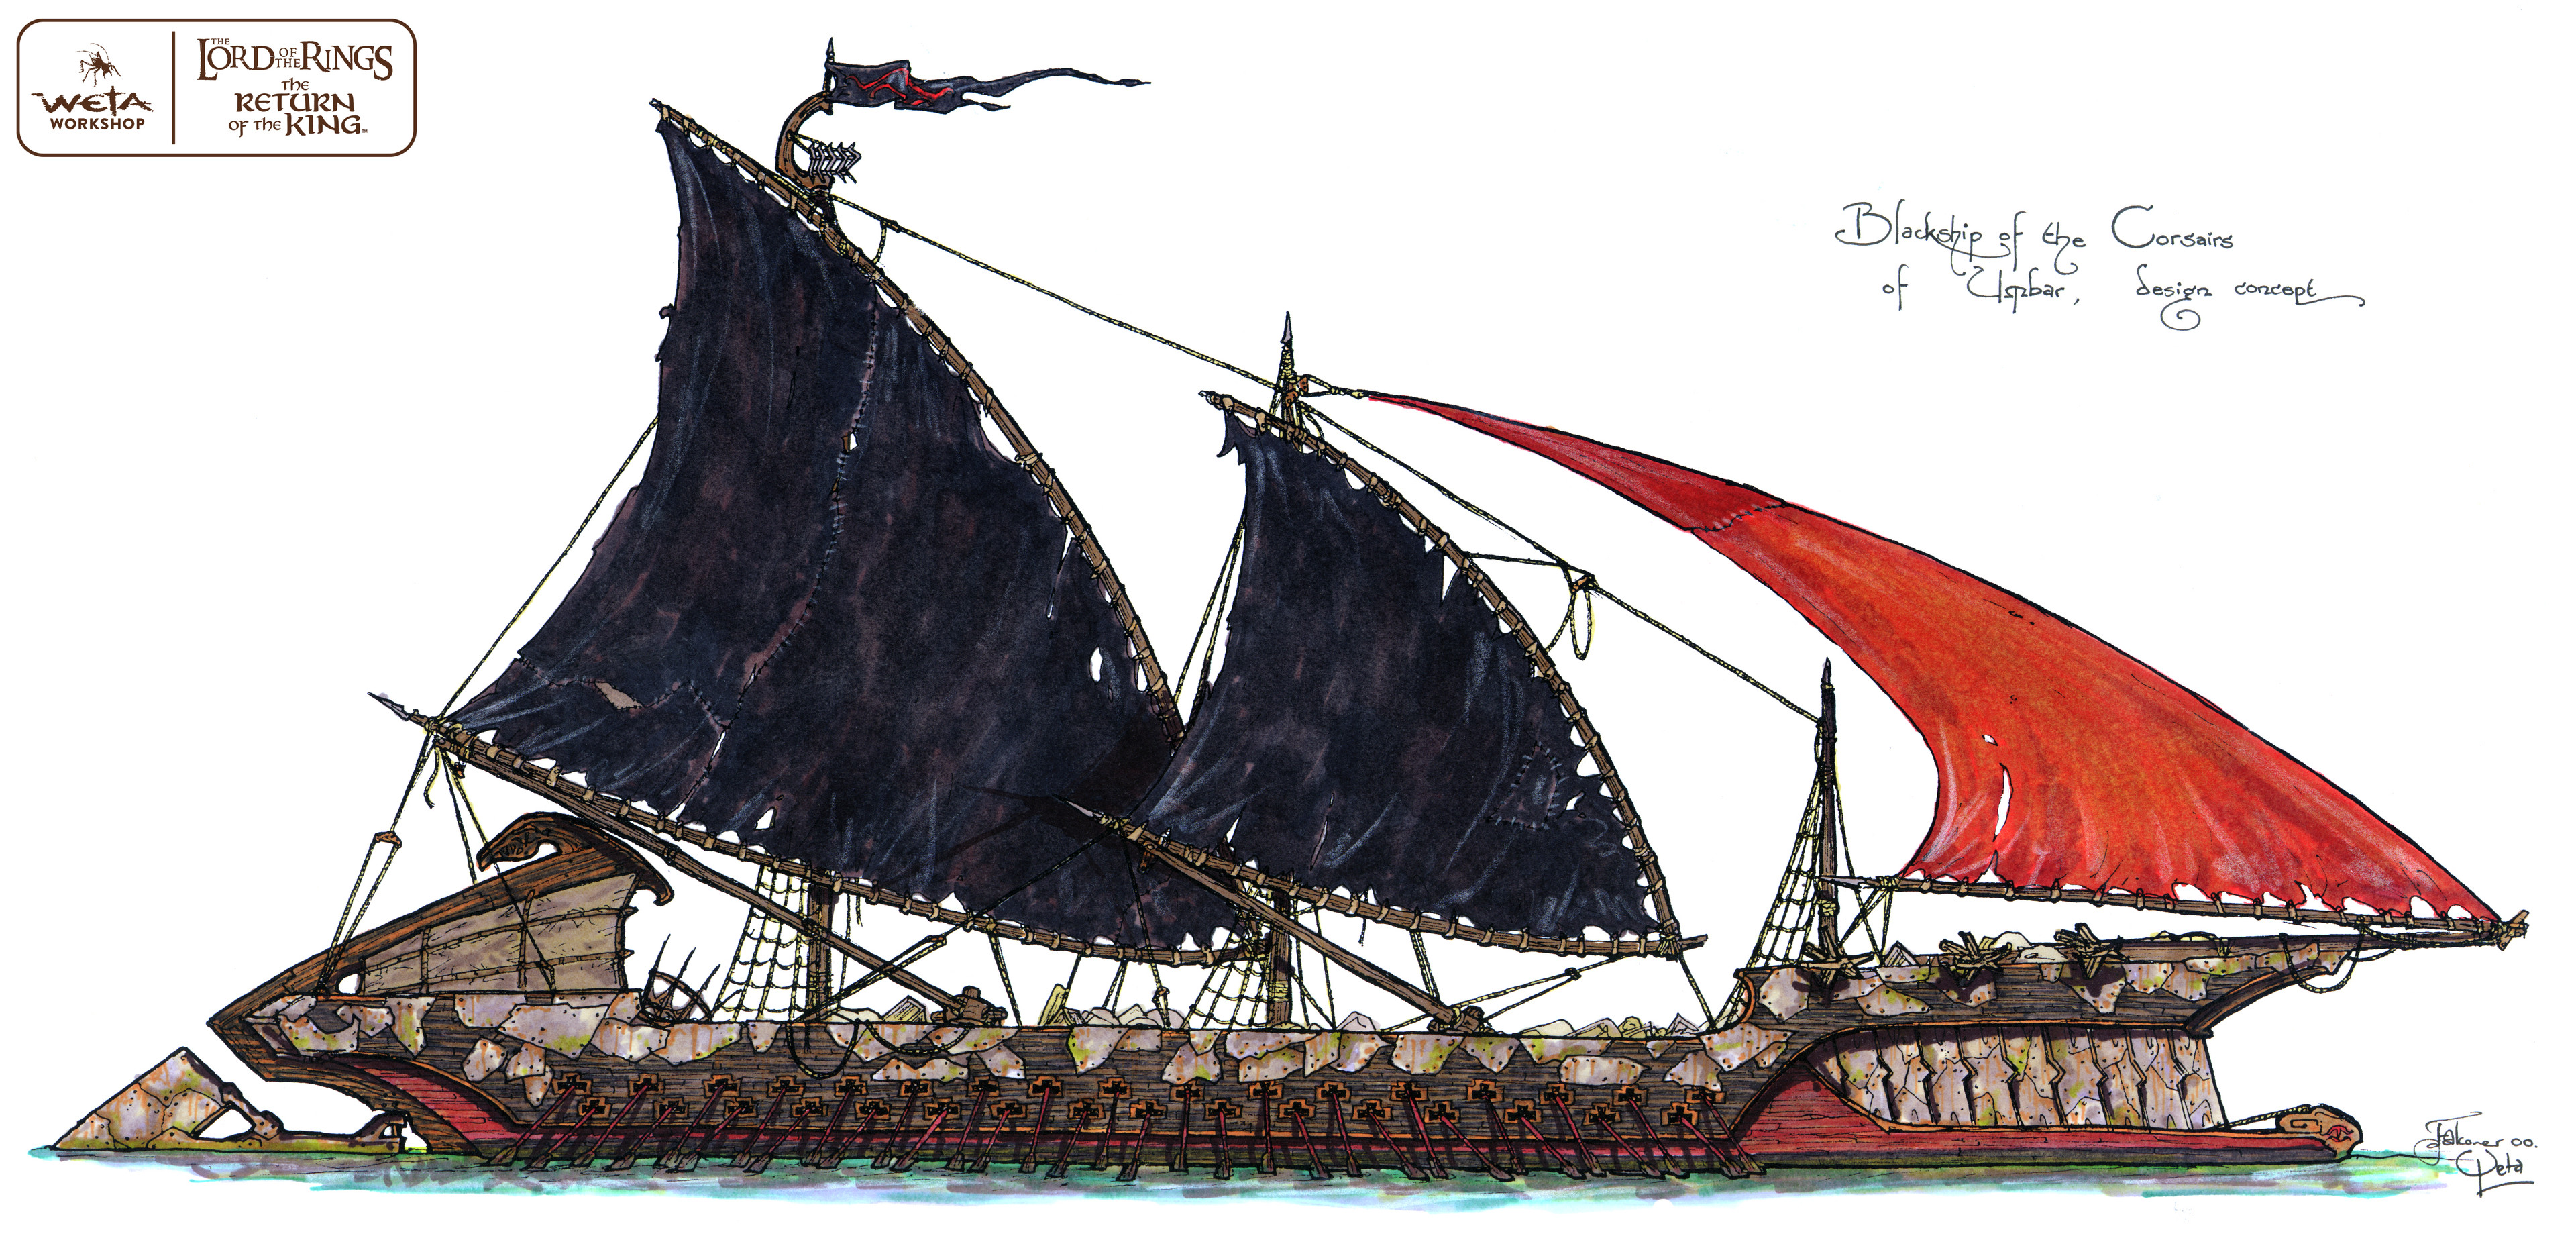 Corsair Ship - Artist: Daniel Falconer